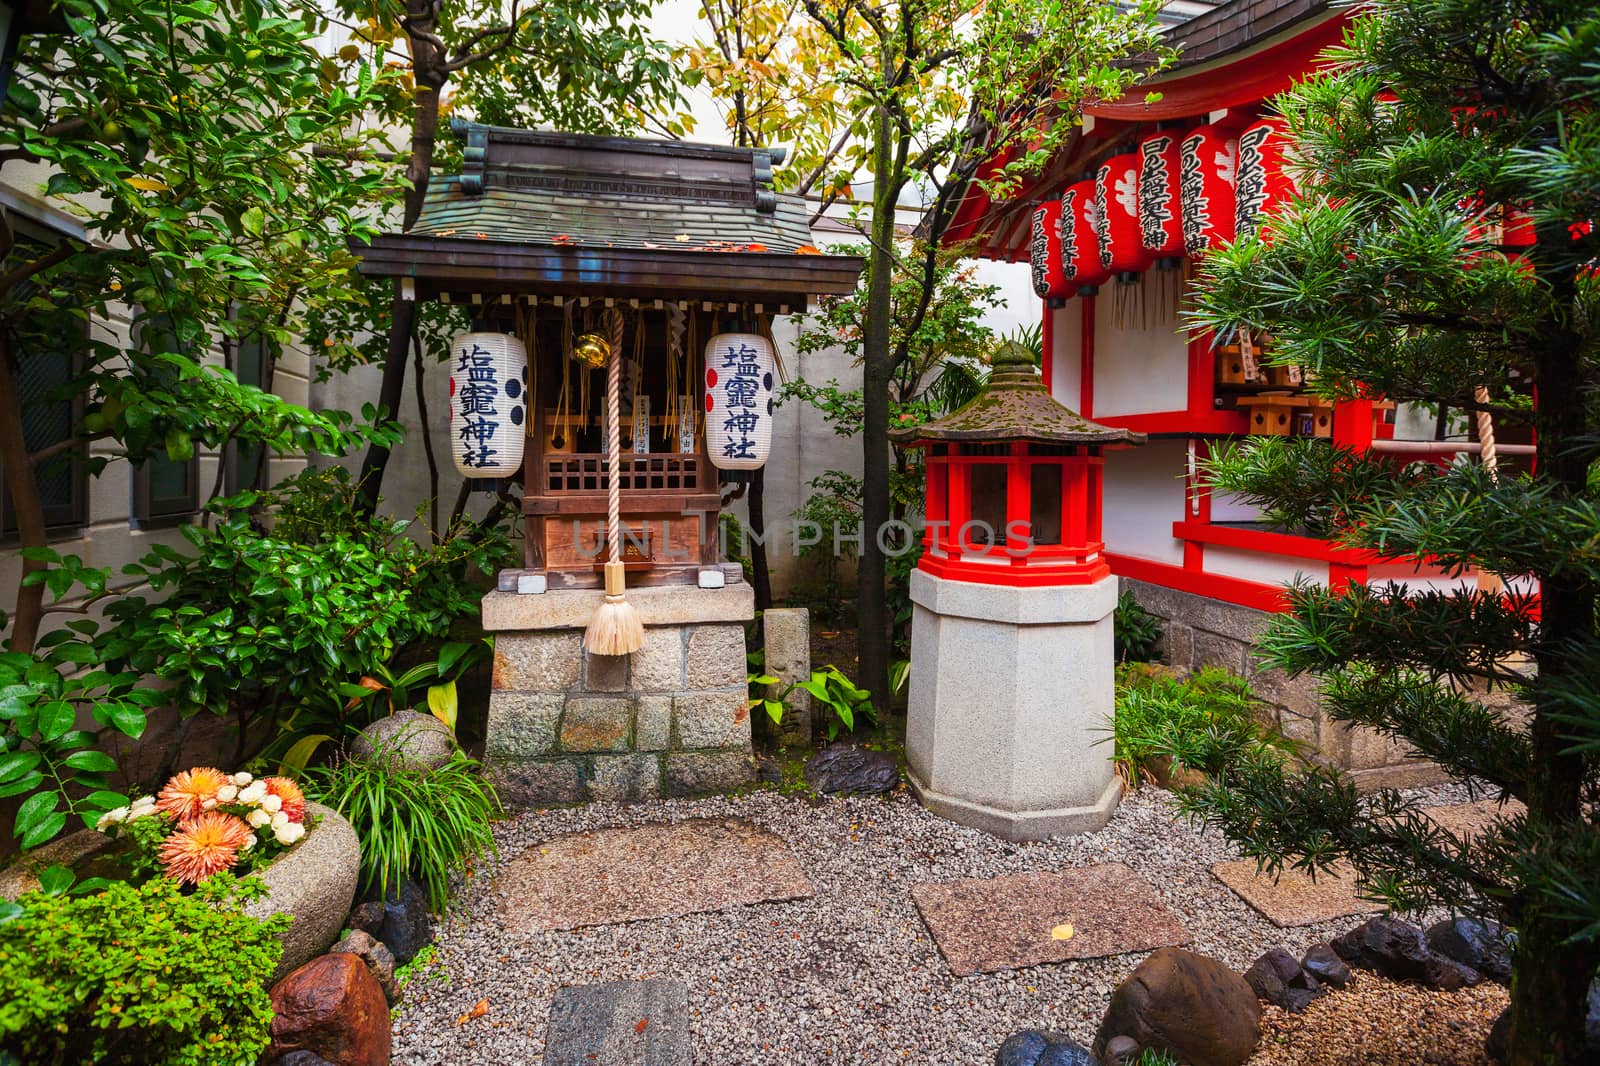 Shiogama shrine close to Hinode Inari Shinto shrine at Nishiki Tenmangu Shrine area in Kyoto, Japan